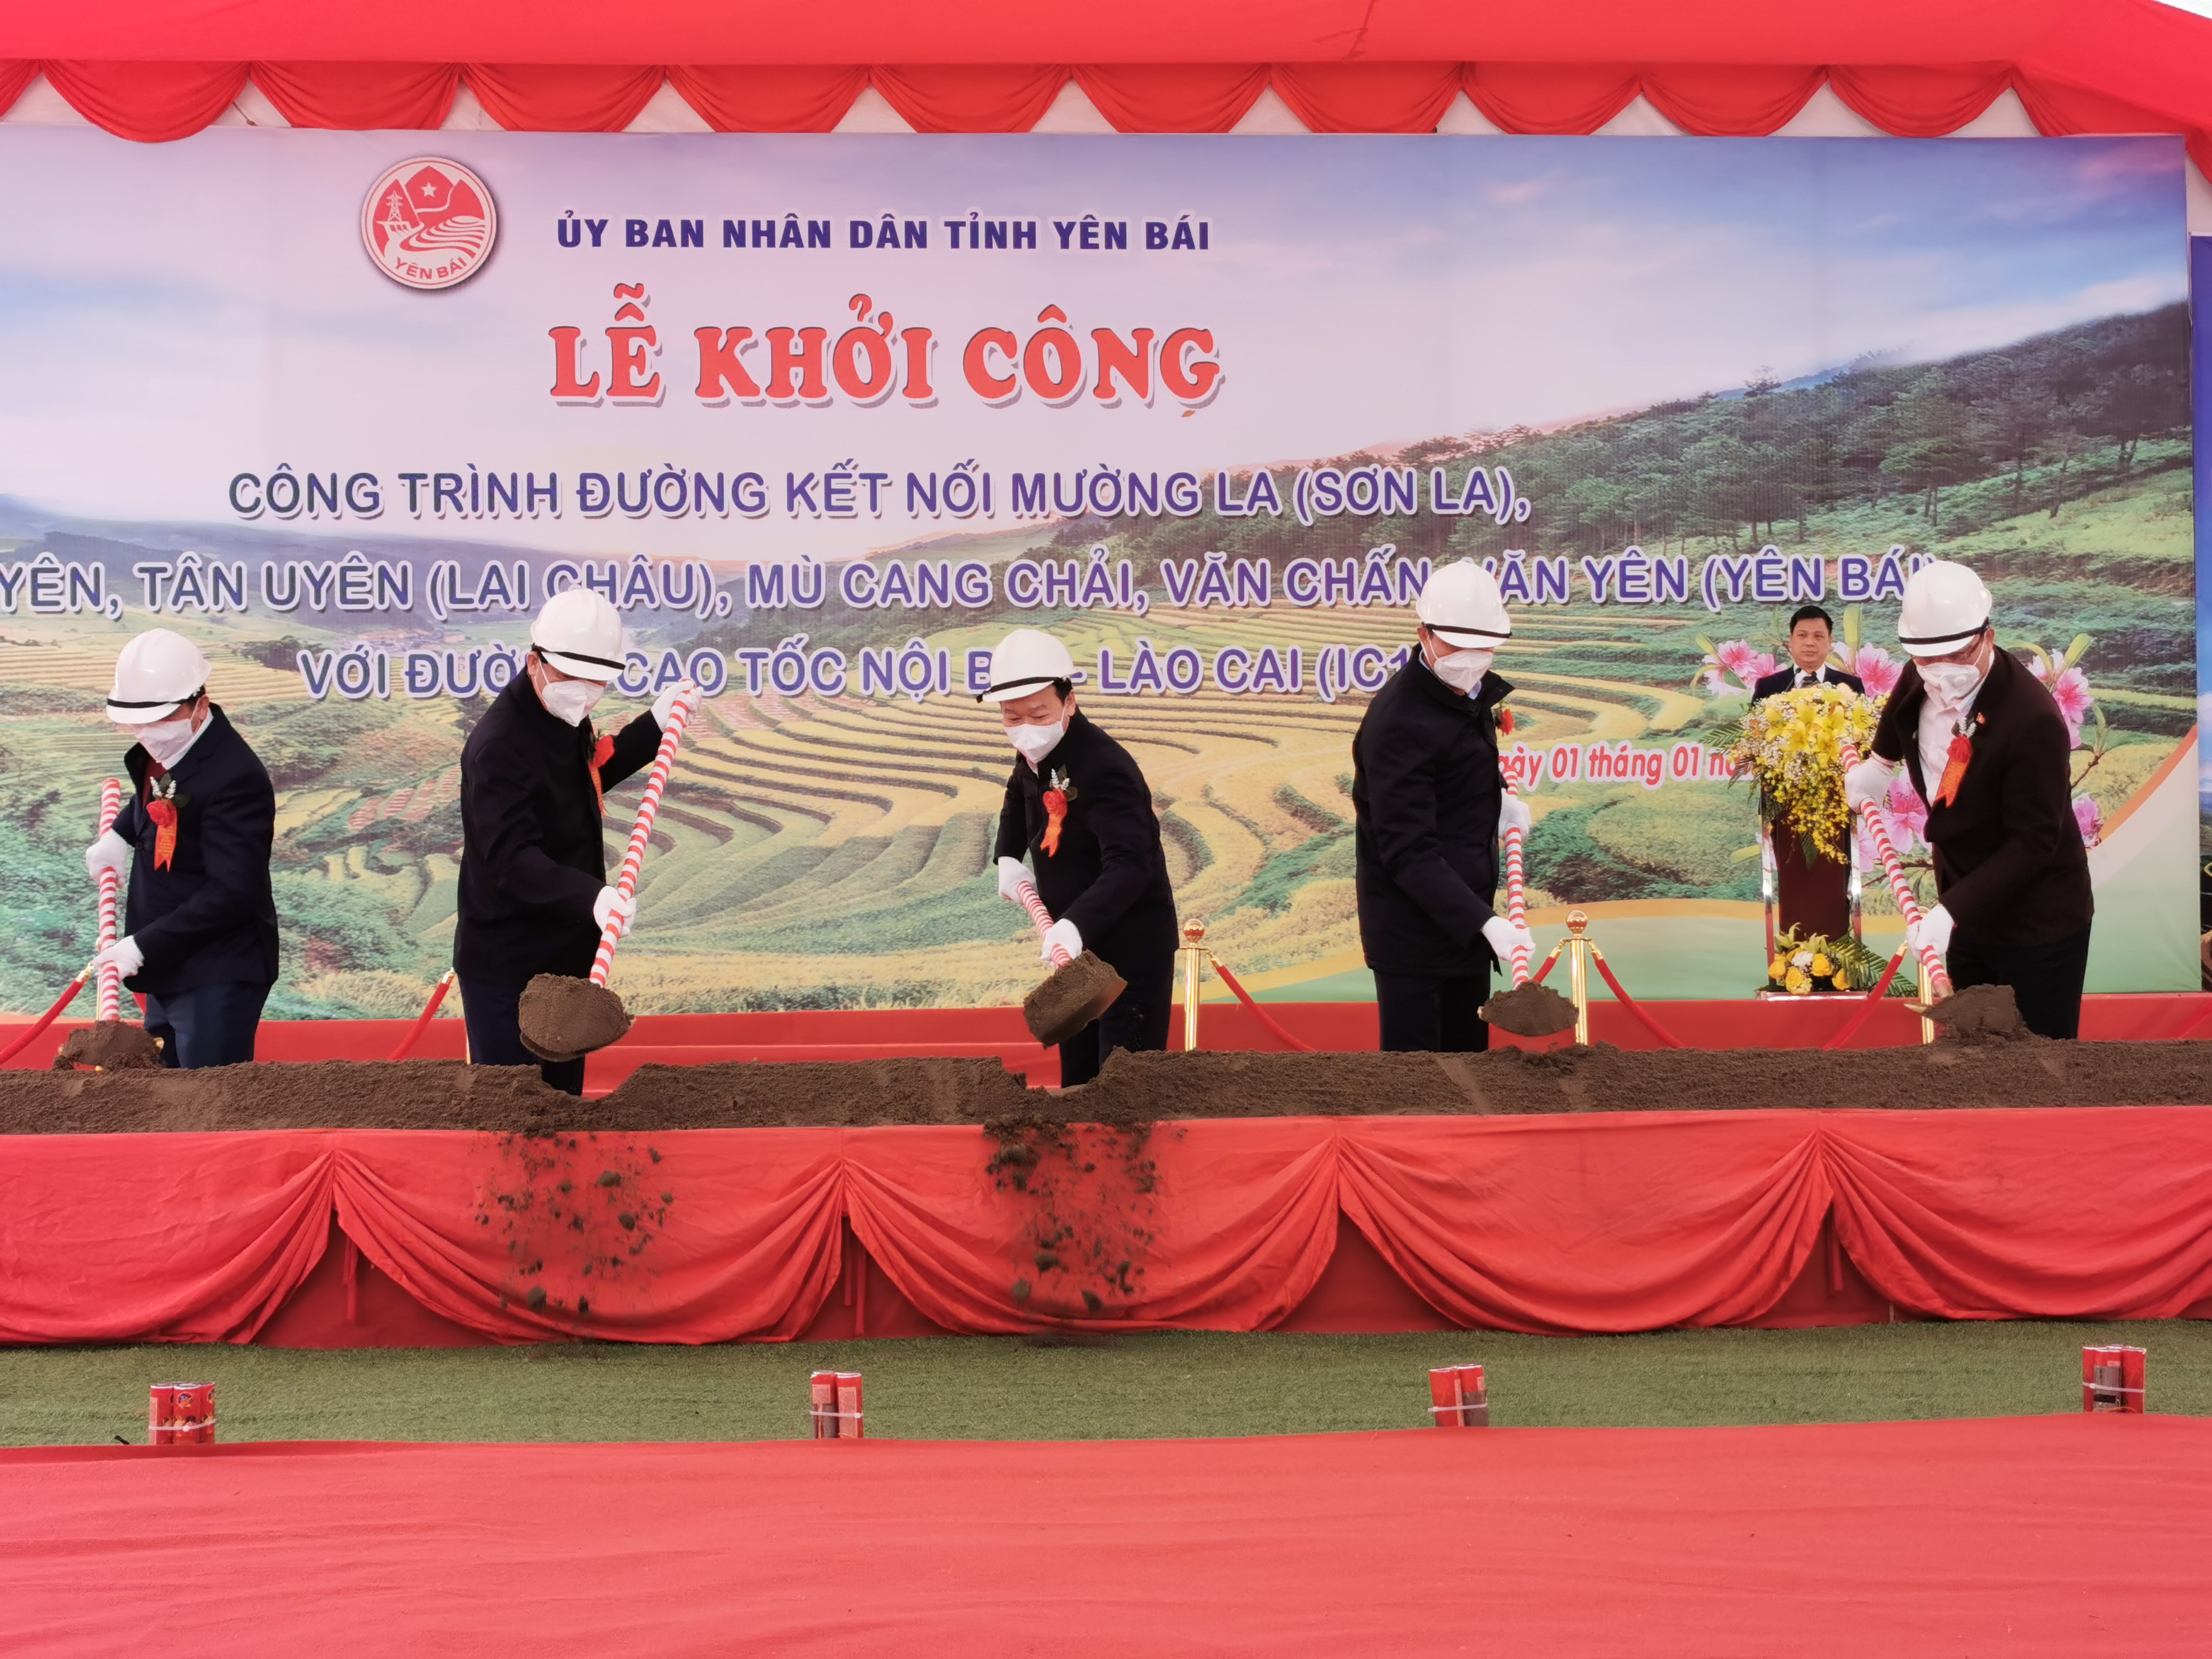 The groundbreaking of the project is organized in Yen Bai Province, January 1, 2022. Photo: Vu Tuan / Tuoi Tre